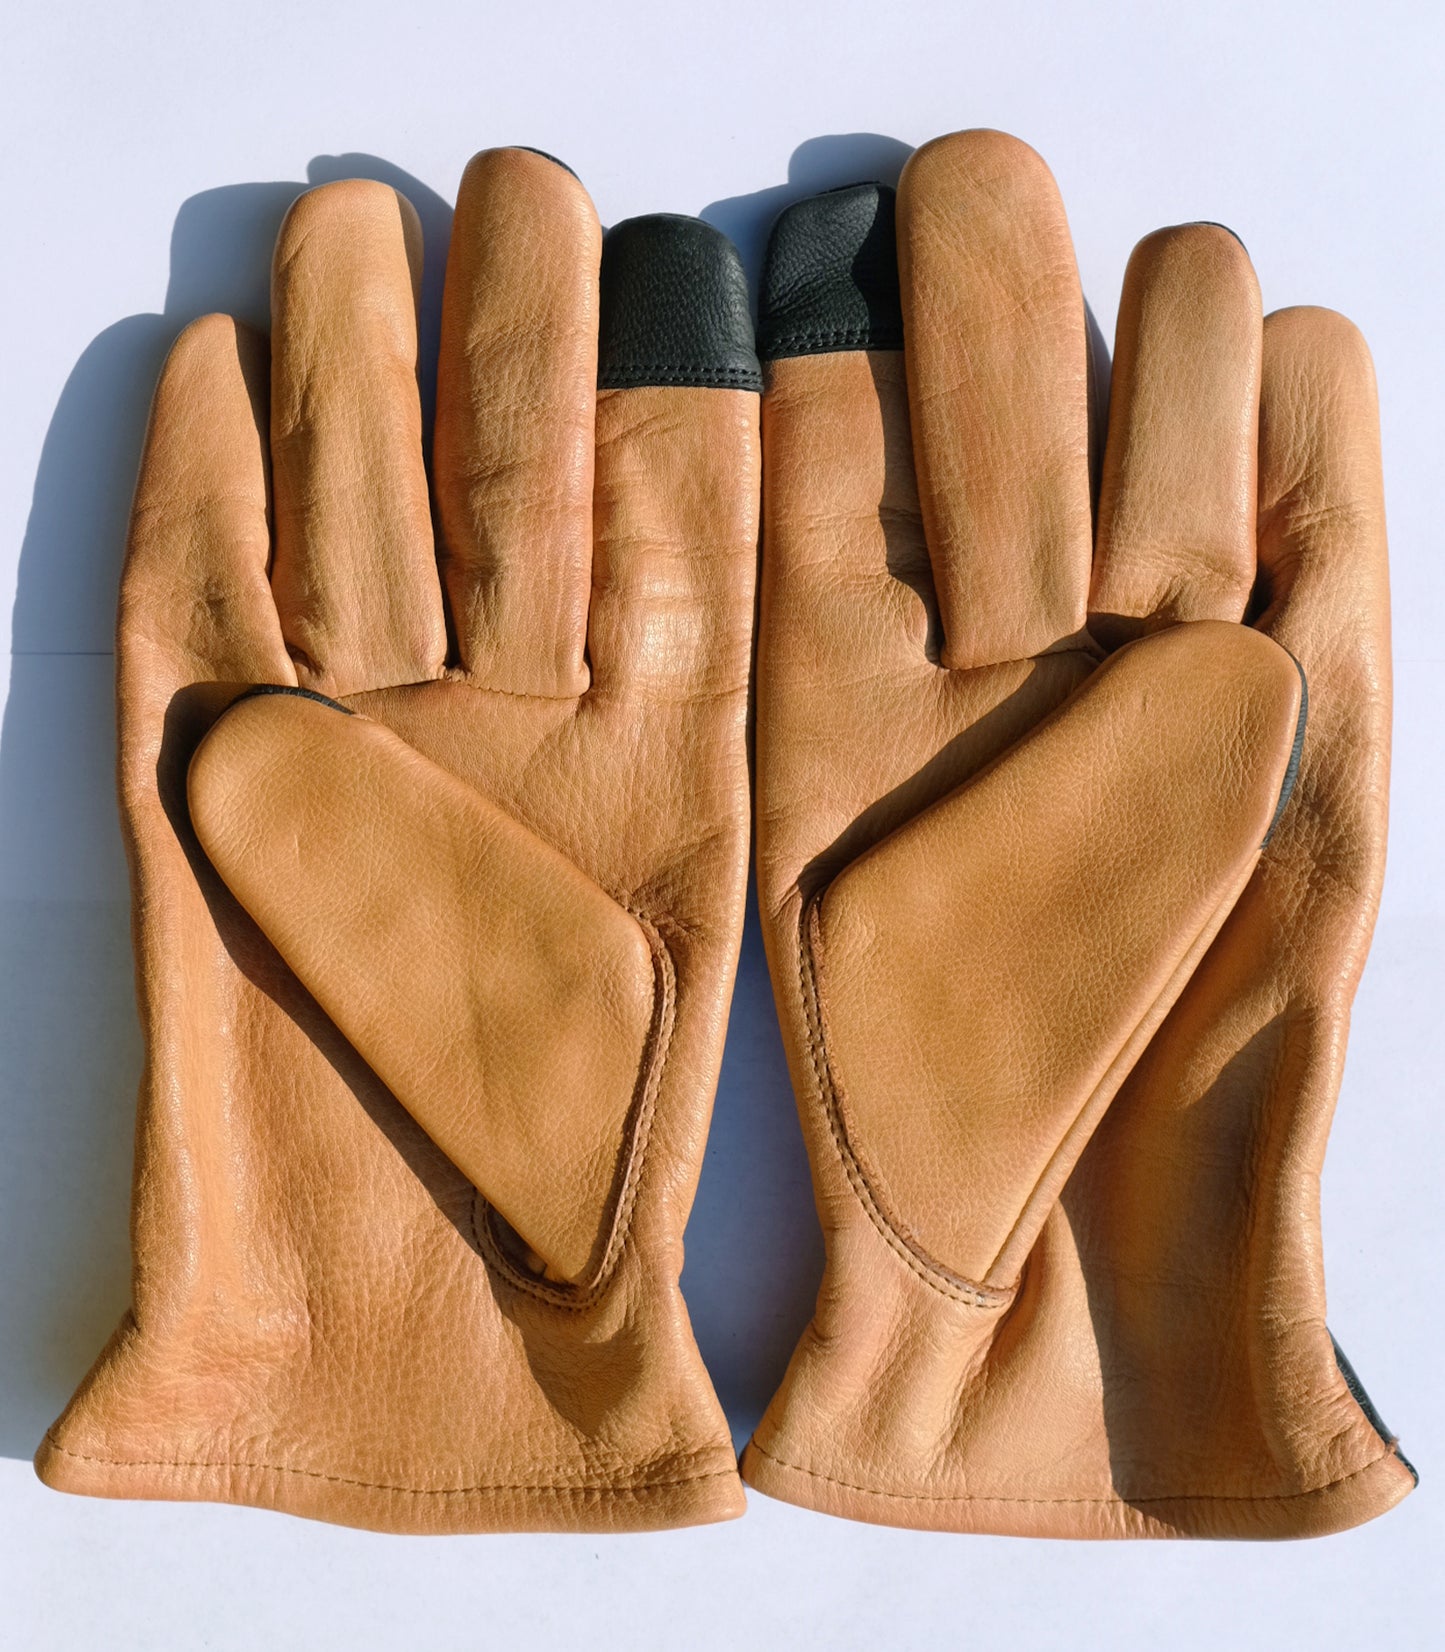 NineOne Moto - Mischievous Gloves